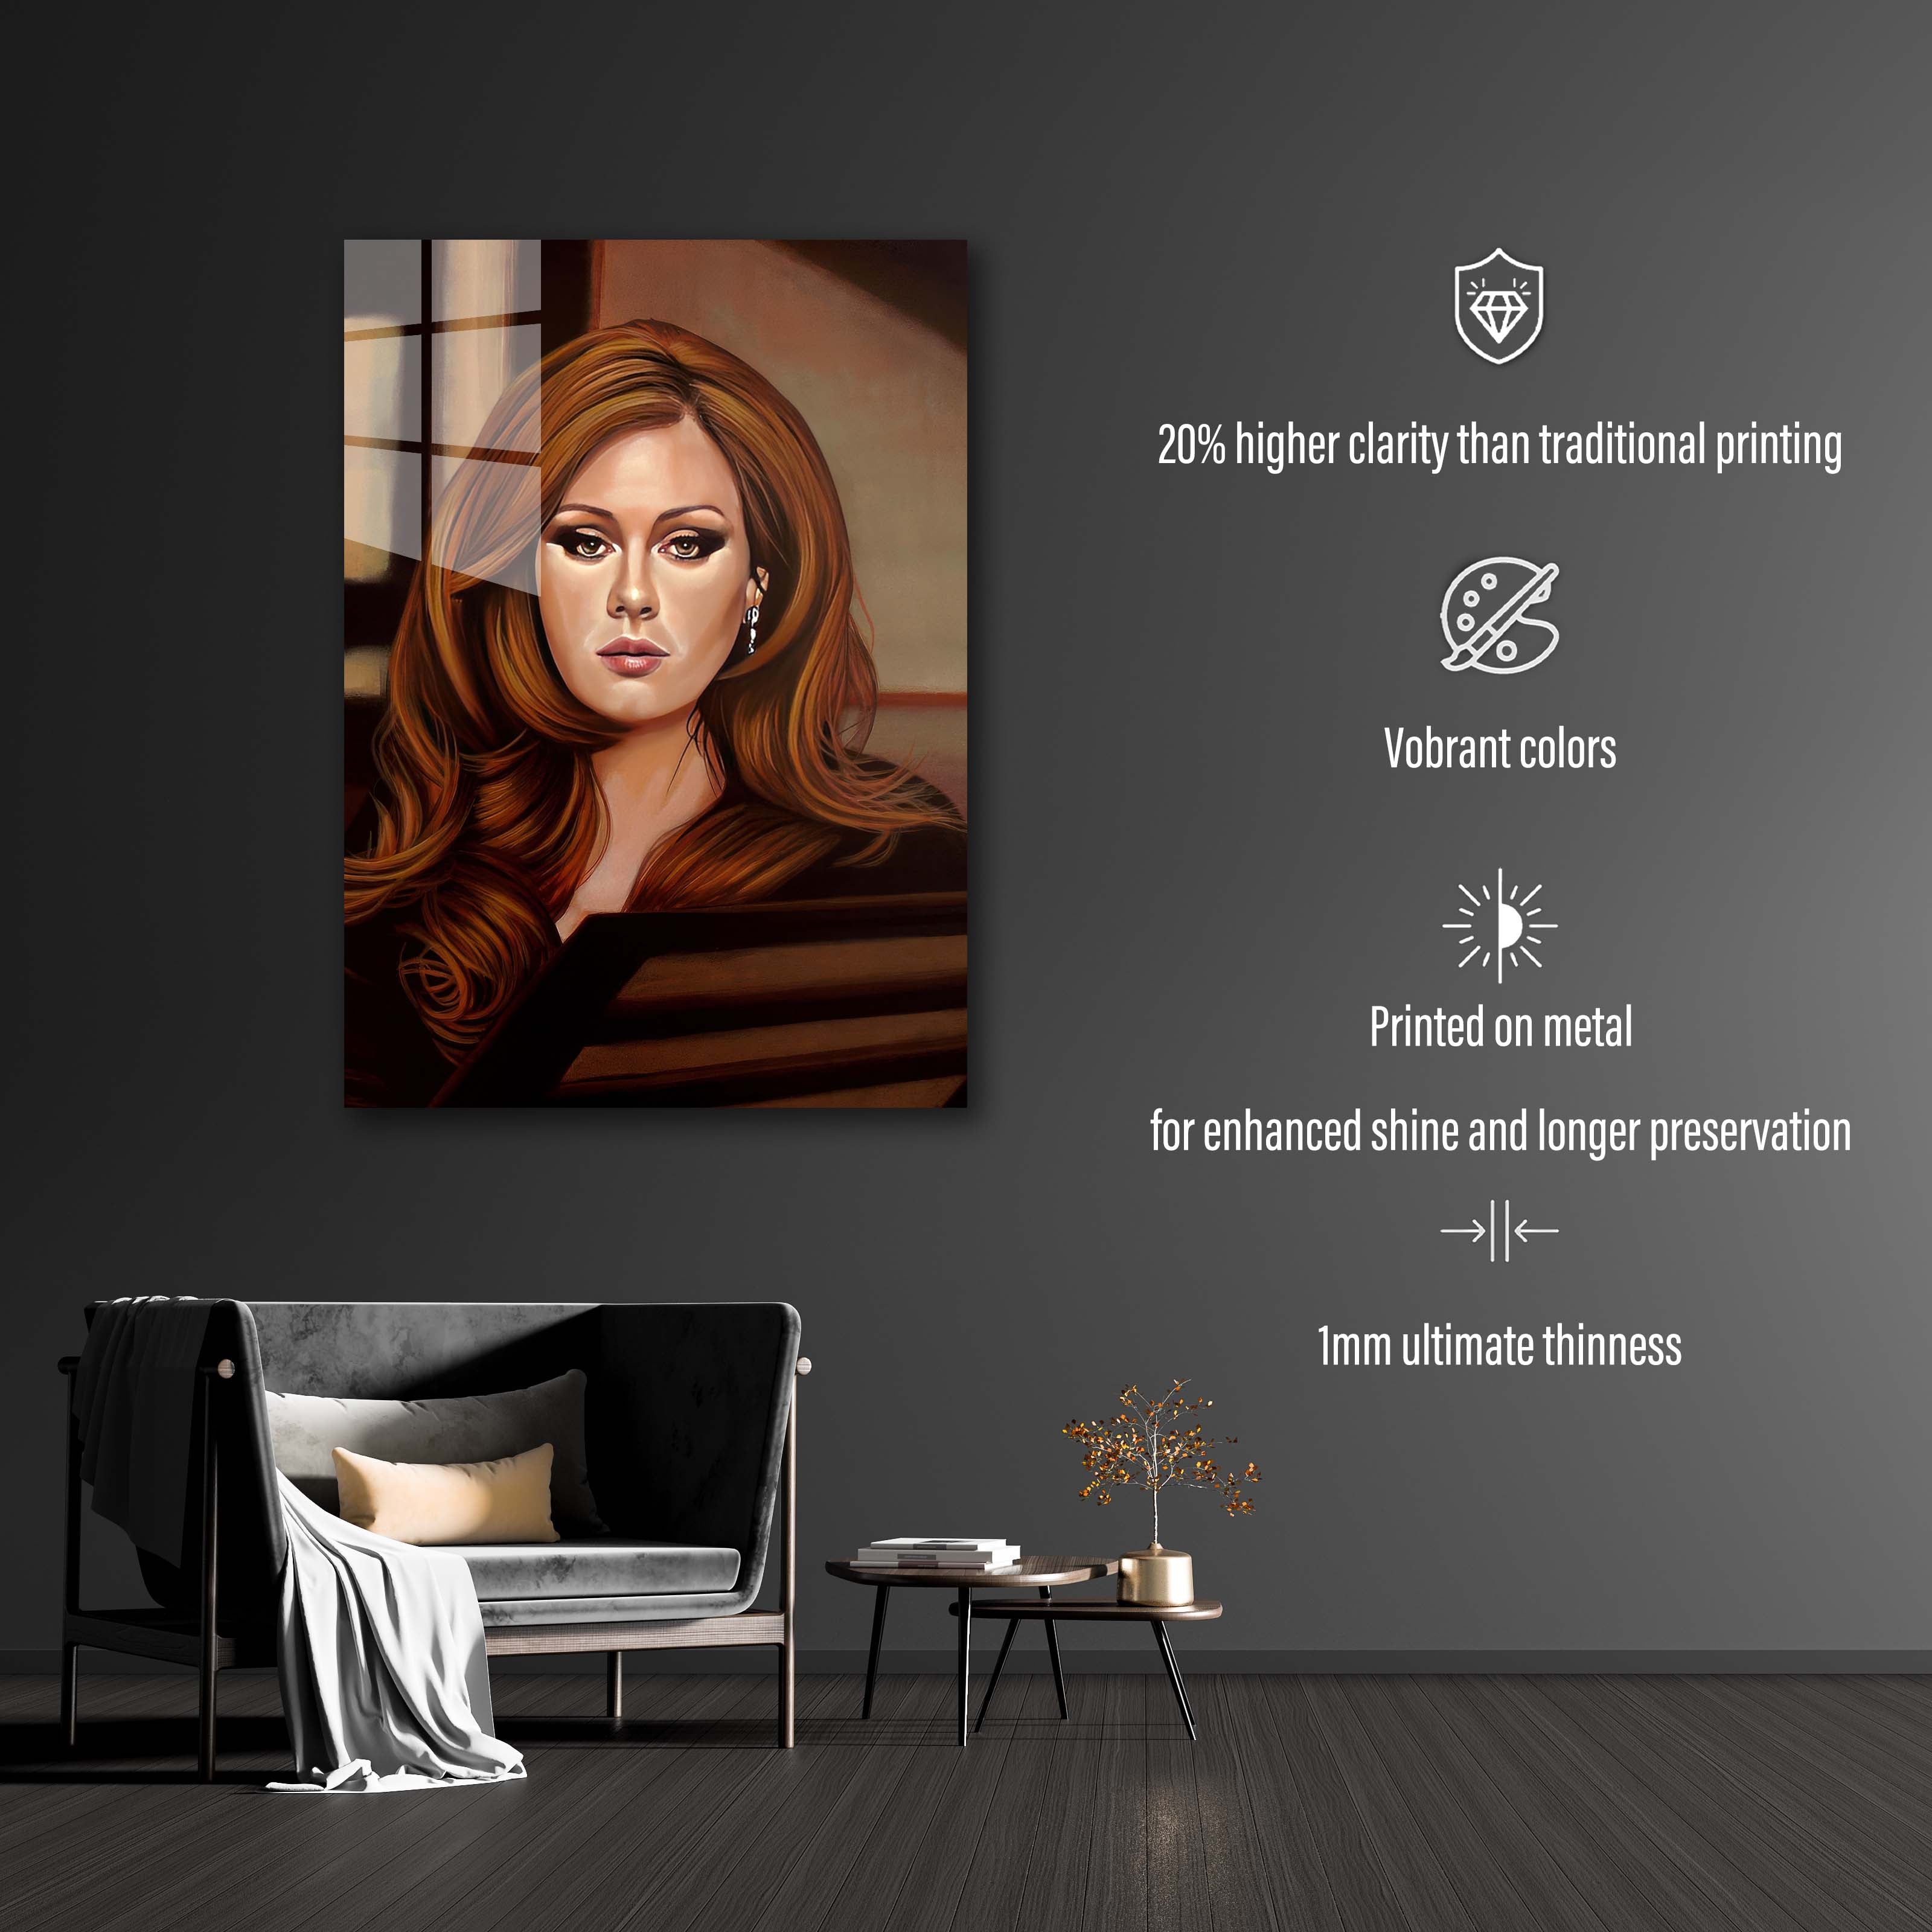 Adele-designed by @Vinahayum